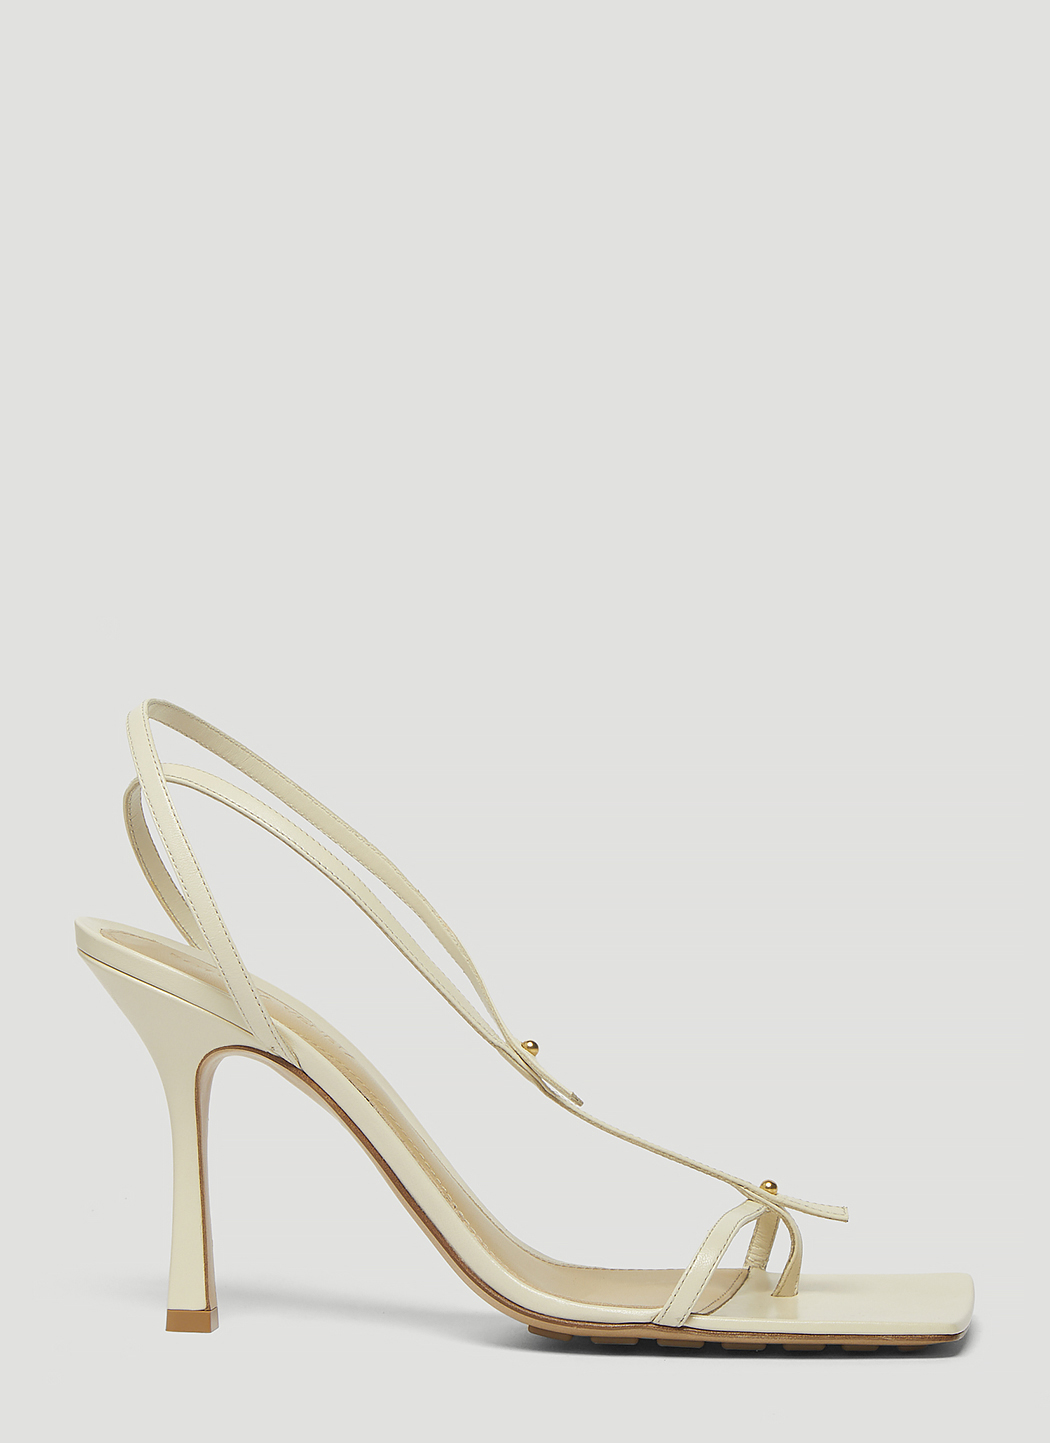 Bottega Veneta Stretch Heeled Sandals in White | LN-CC